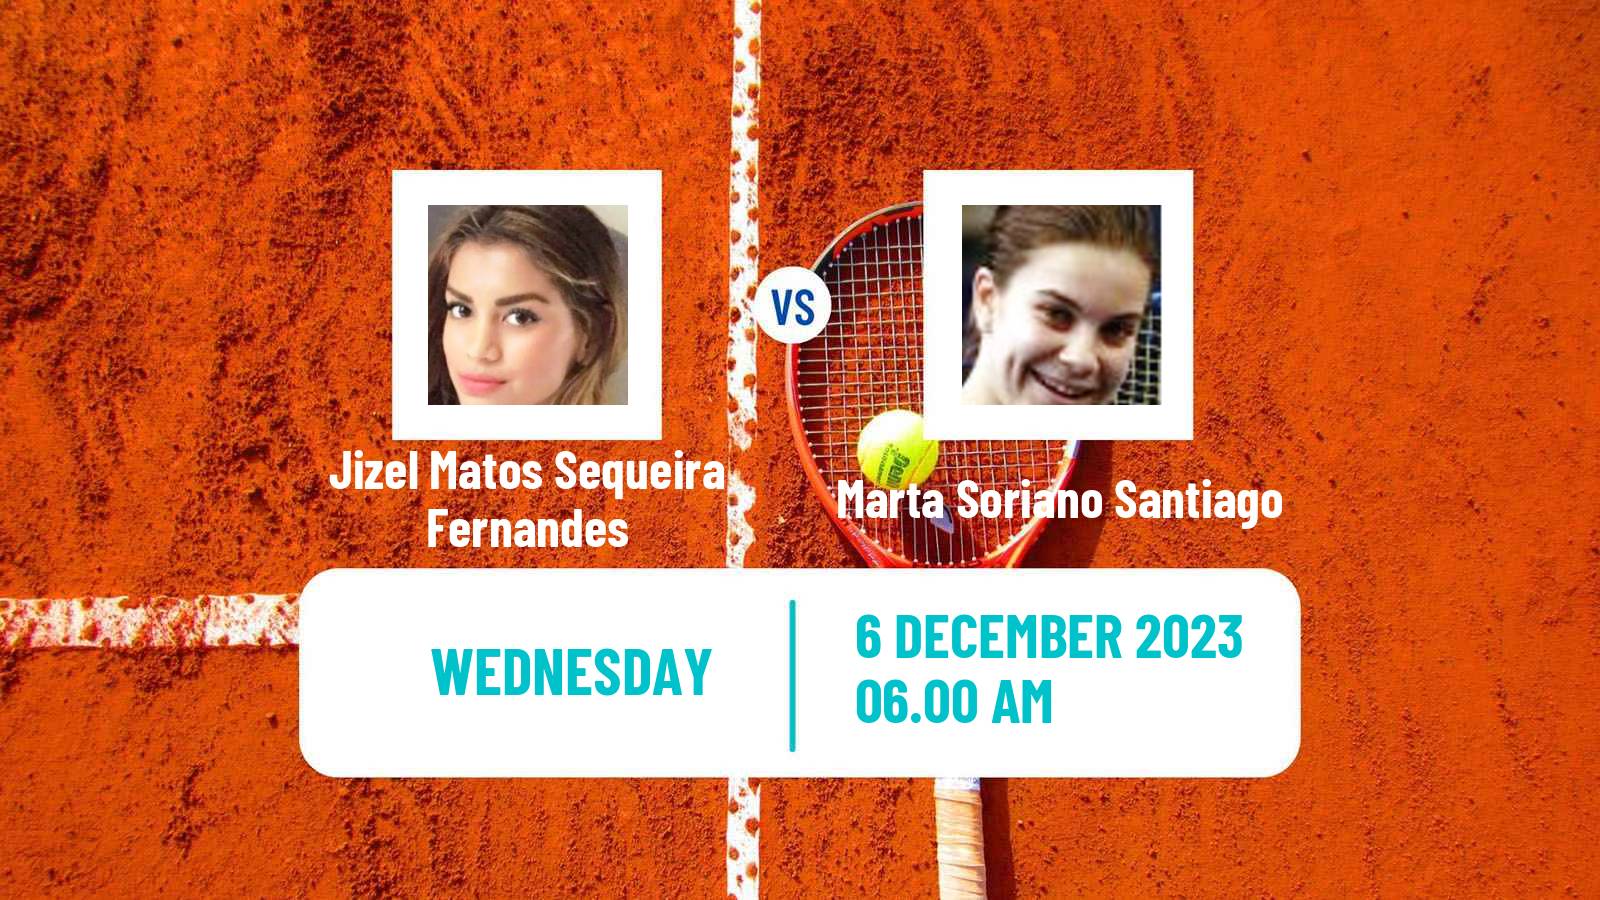 Tennis ITF W15 Valencia 2 Women Jizel Matos Sequeira Fernandes - Marta Soriano Santiago